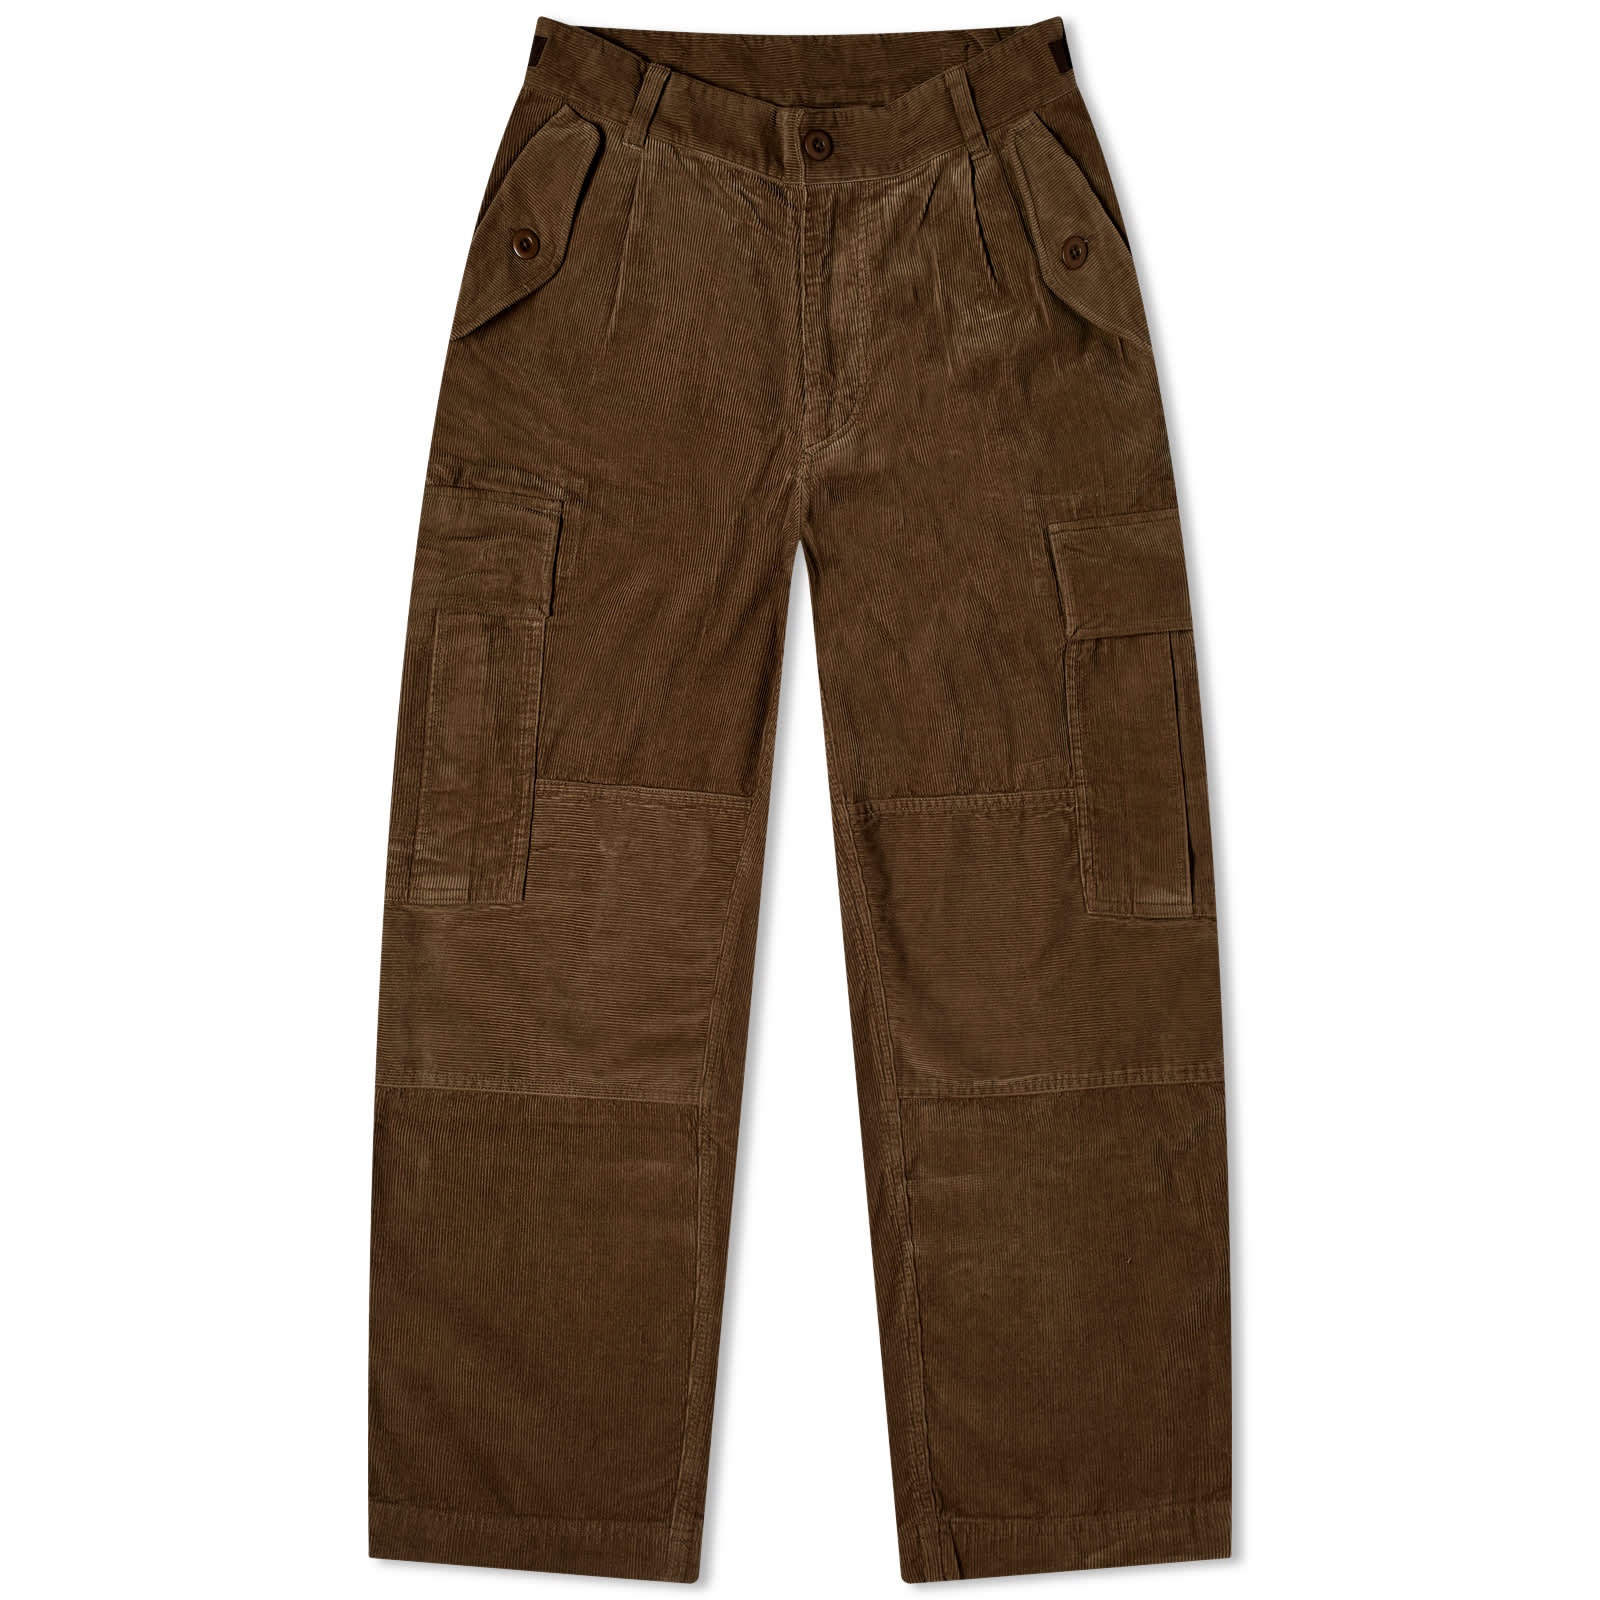 Брюки Frizmworks Corduroy M65 Field, коричневый брюки frizmworks размер xl коричневый